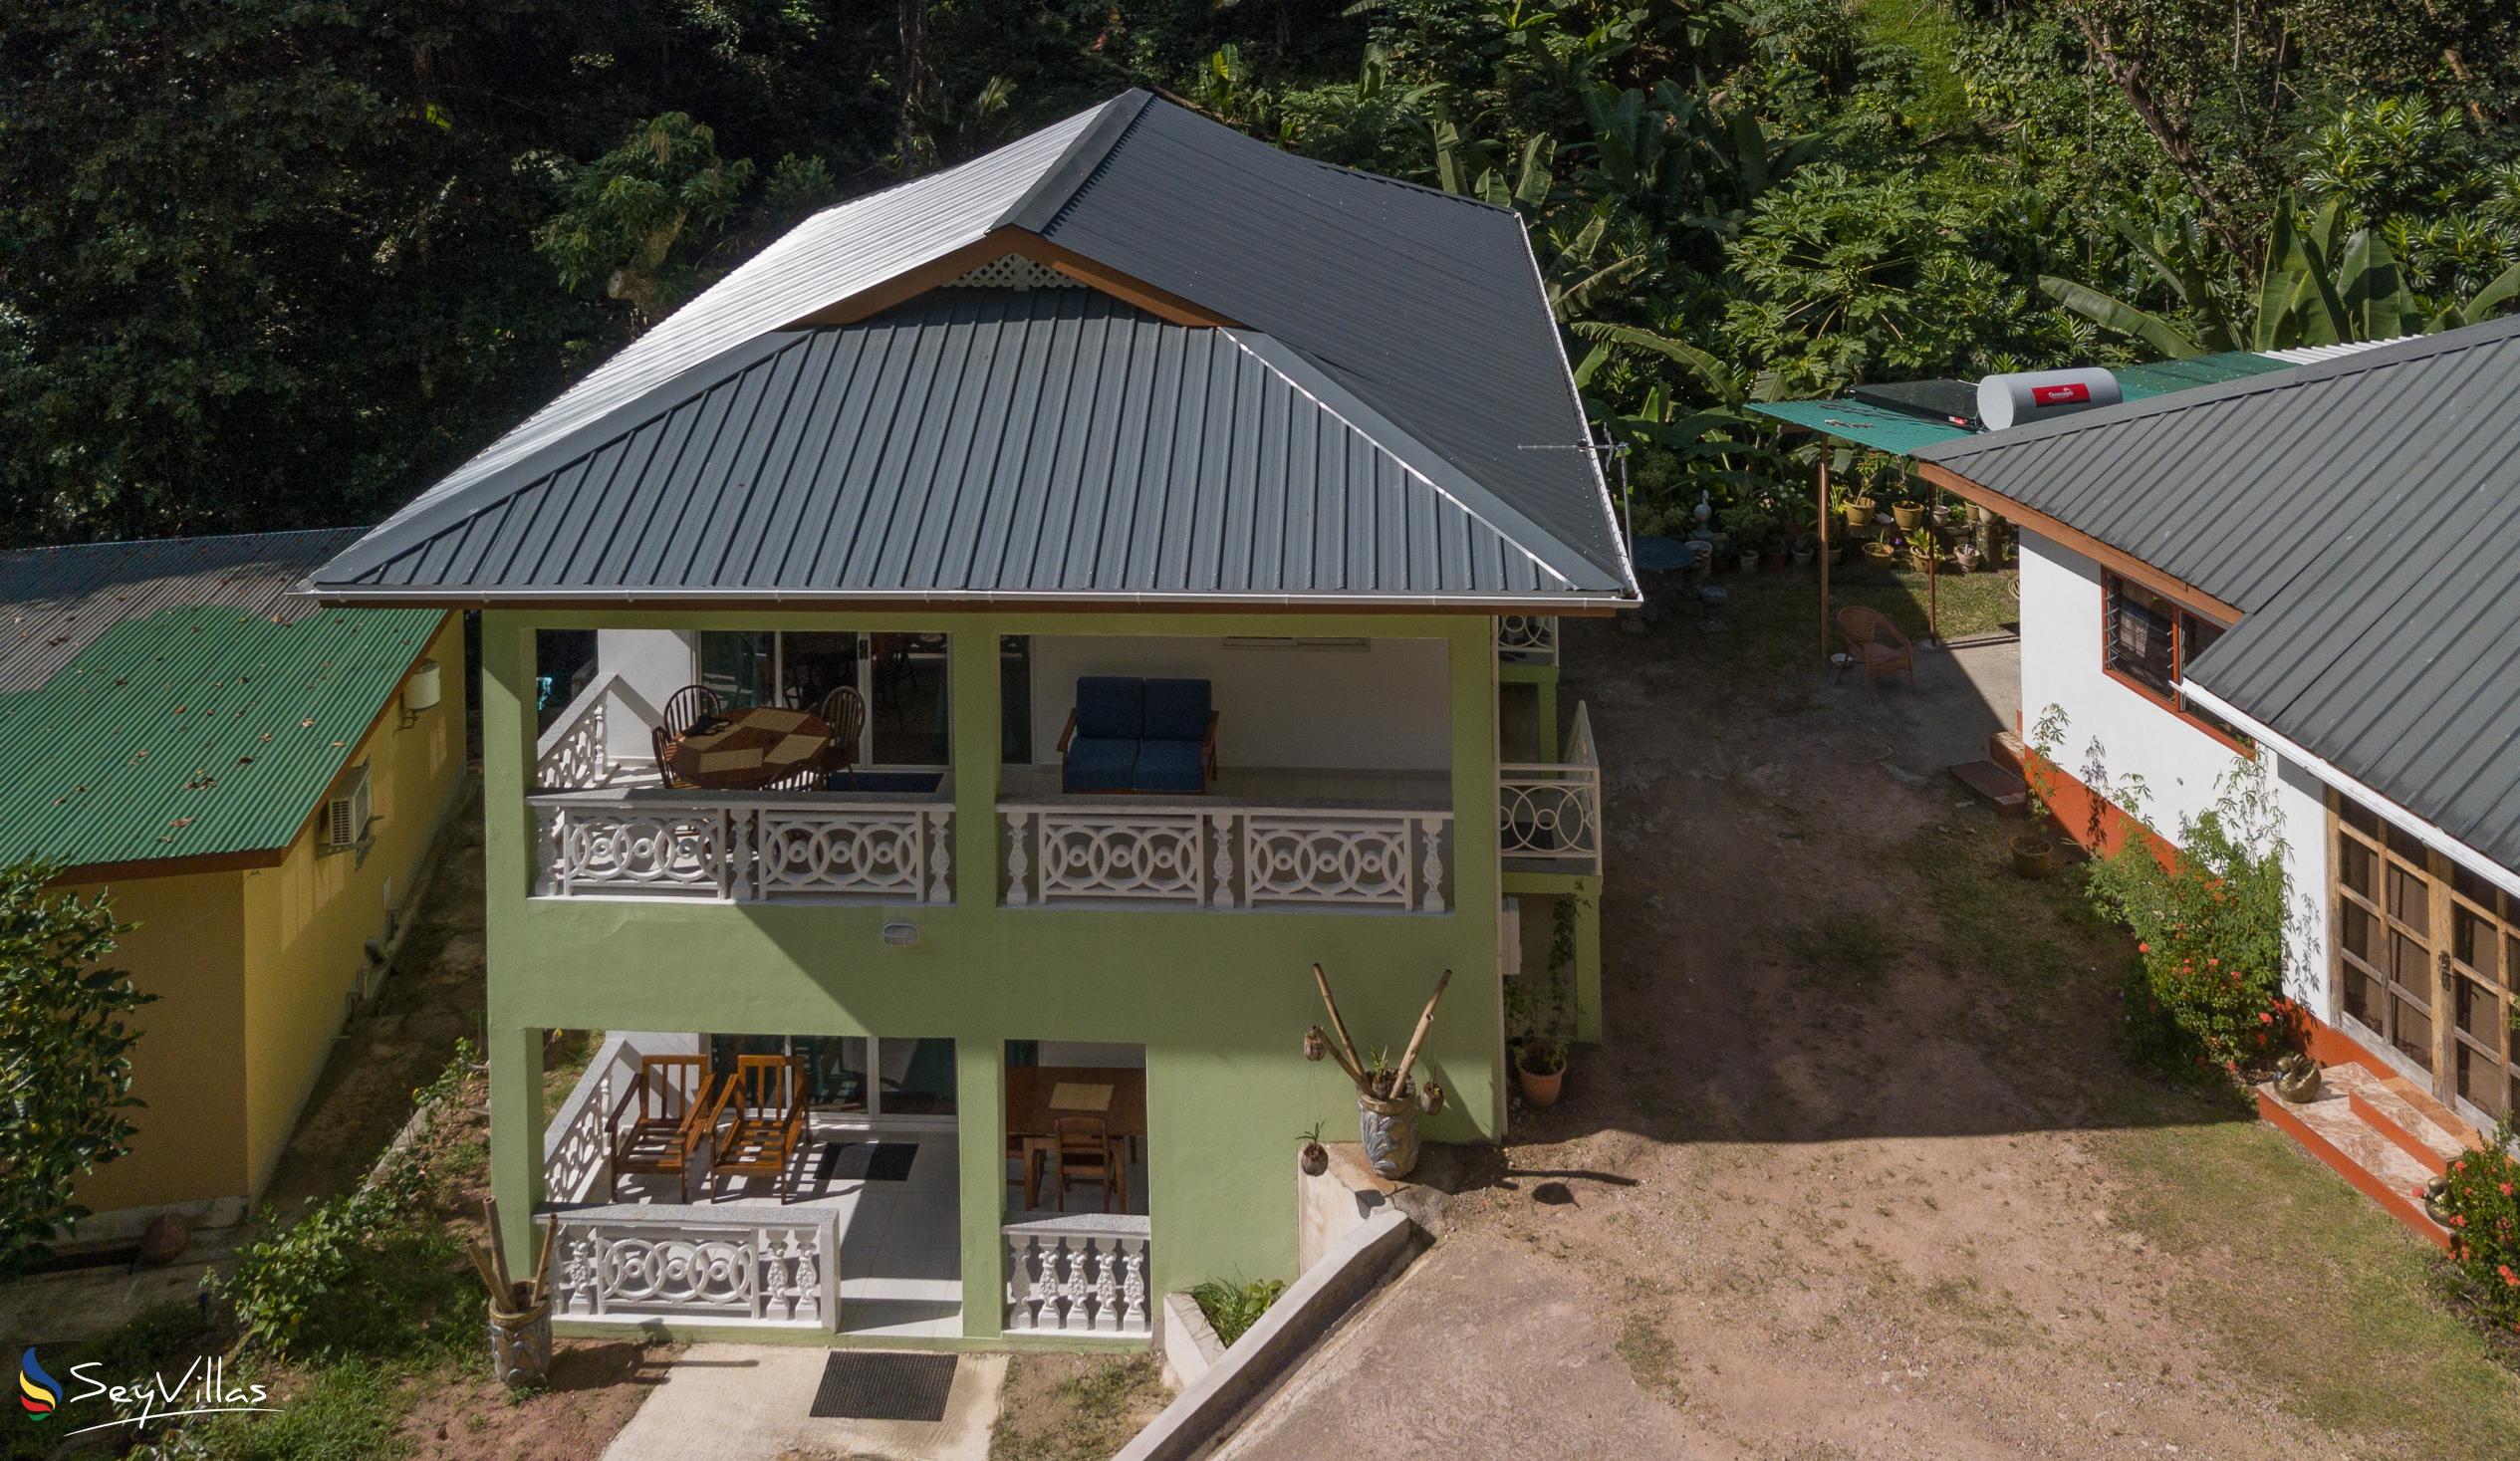 Photo 2: Fond B'Offay Lodge - Outdoor area - Praslin (Seychelles)